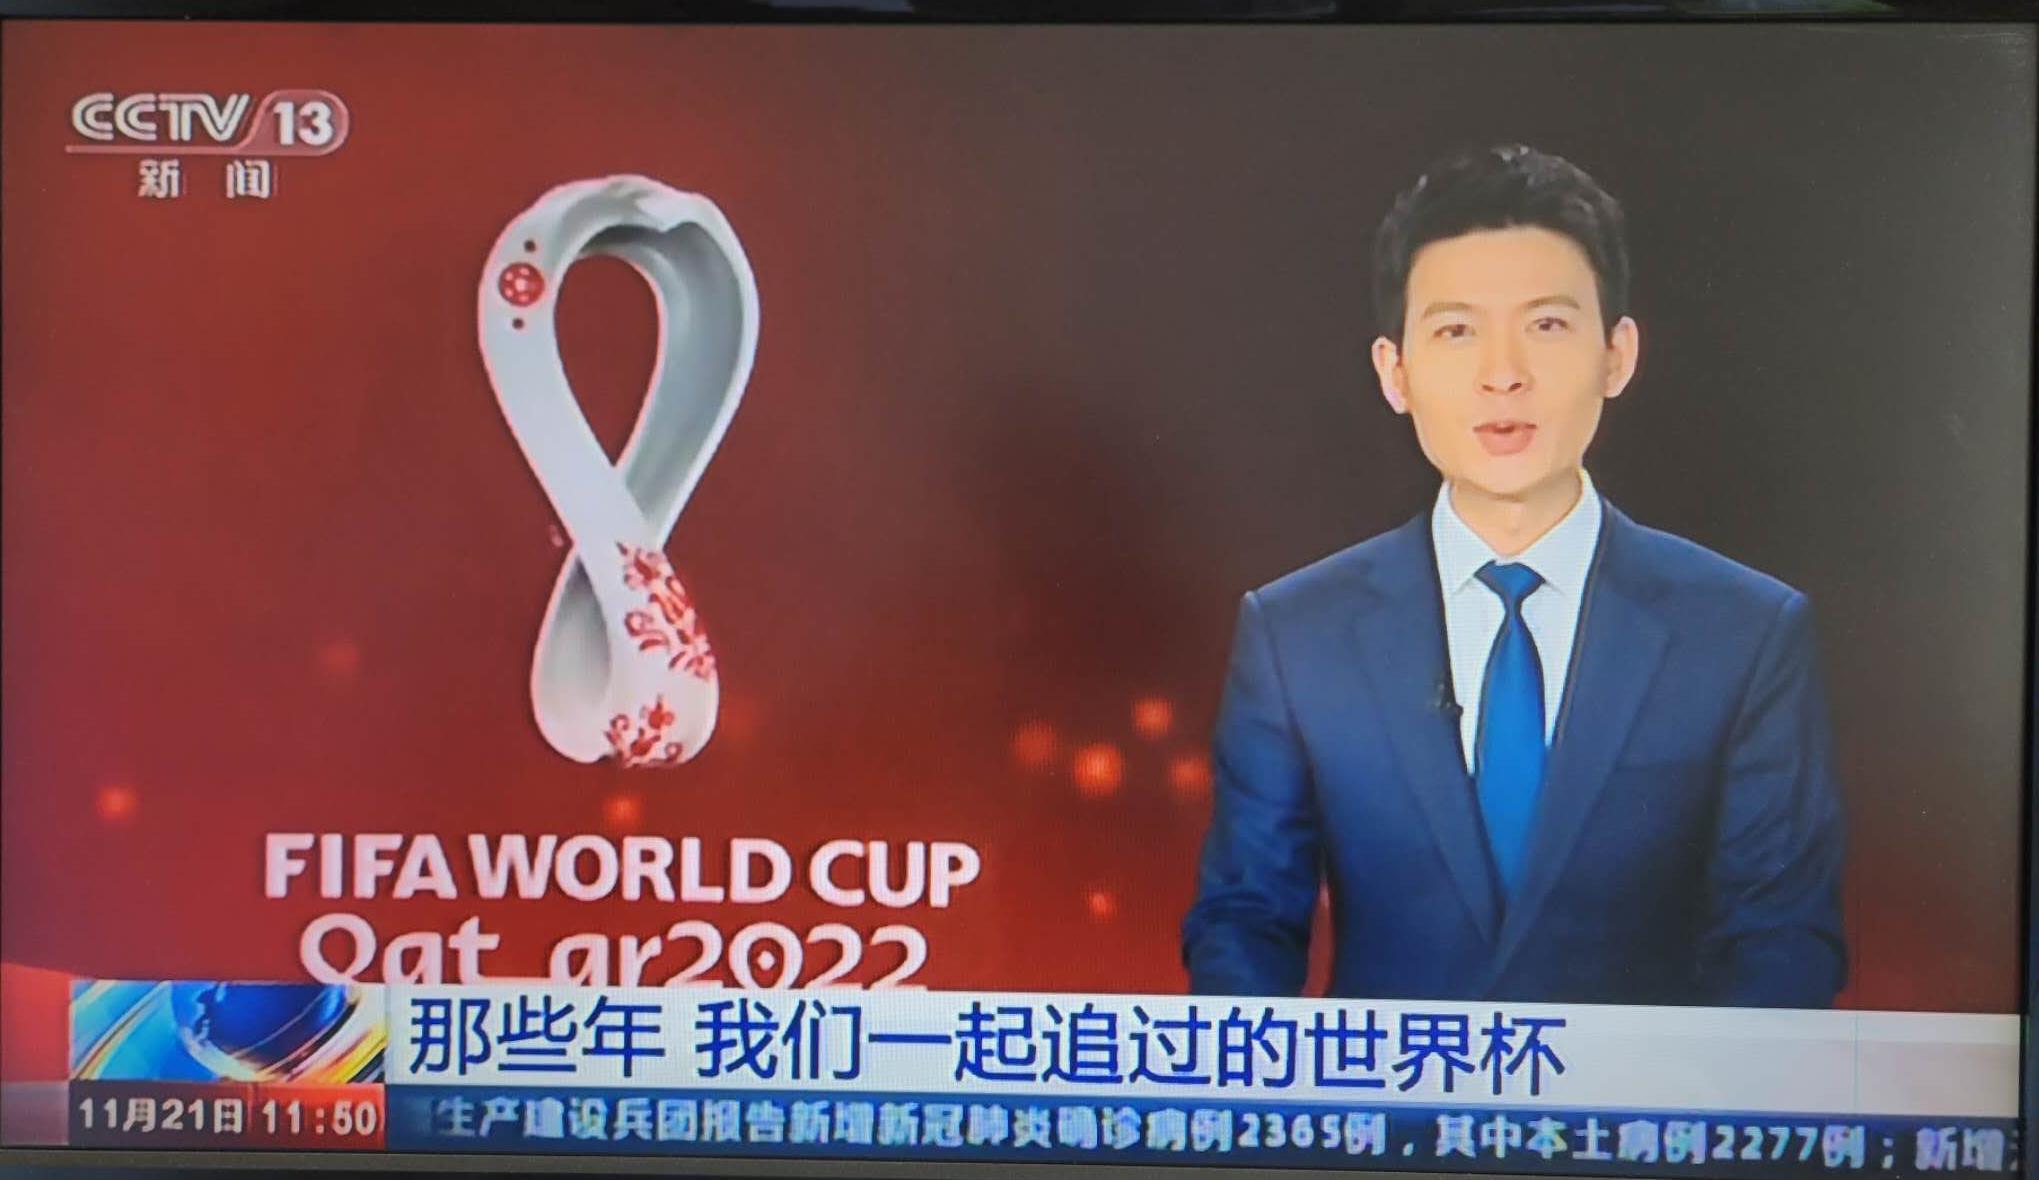 CCTV 등 중국 관영매체들은 중국이 본선에 진출하지 못했지만 카타르 월드컵 관련 소식을 적극 보도하고 있다.(사진: CCTV 캡처)